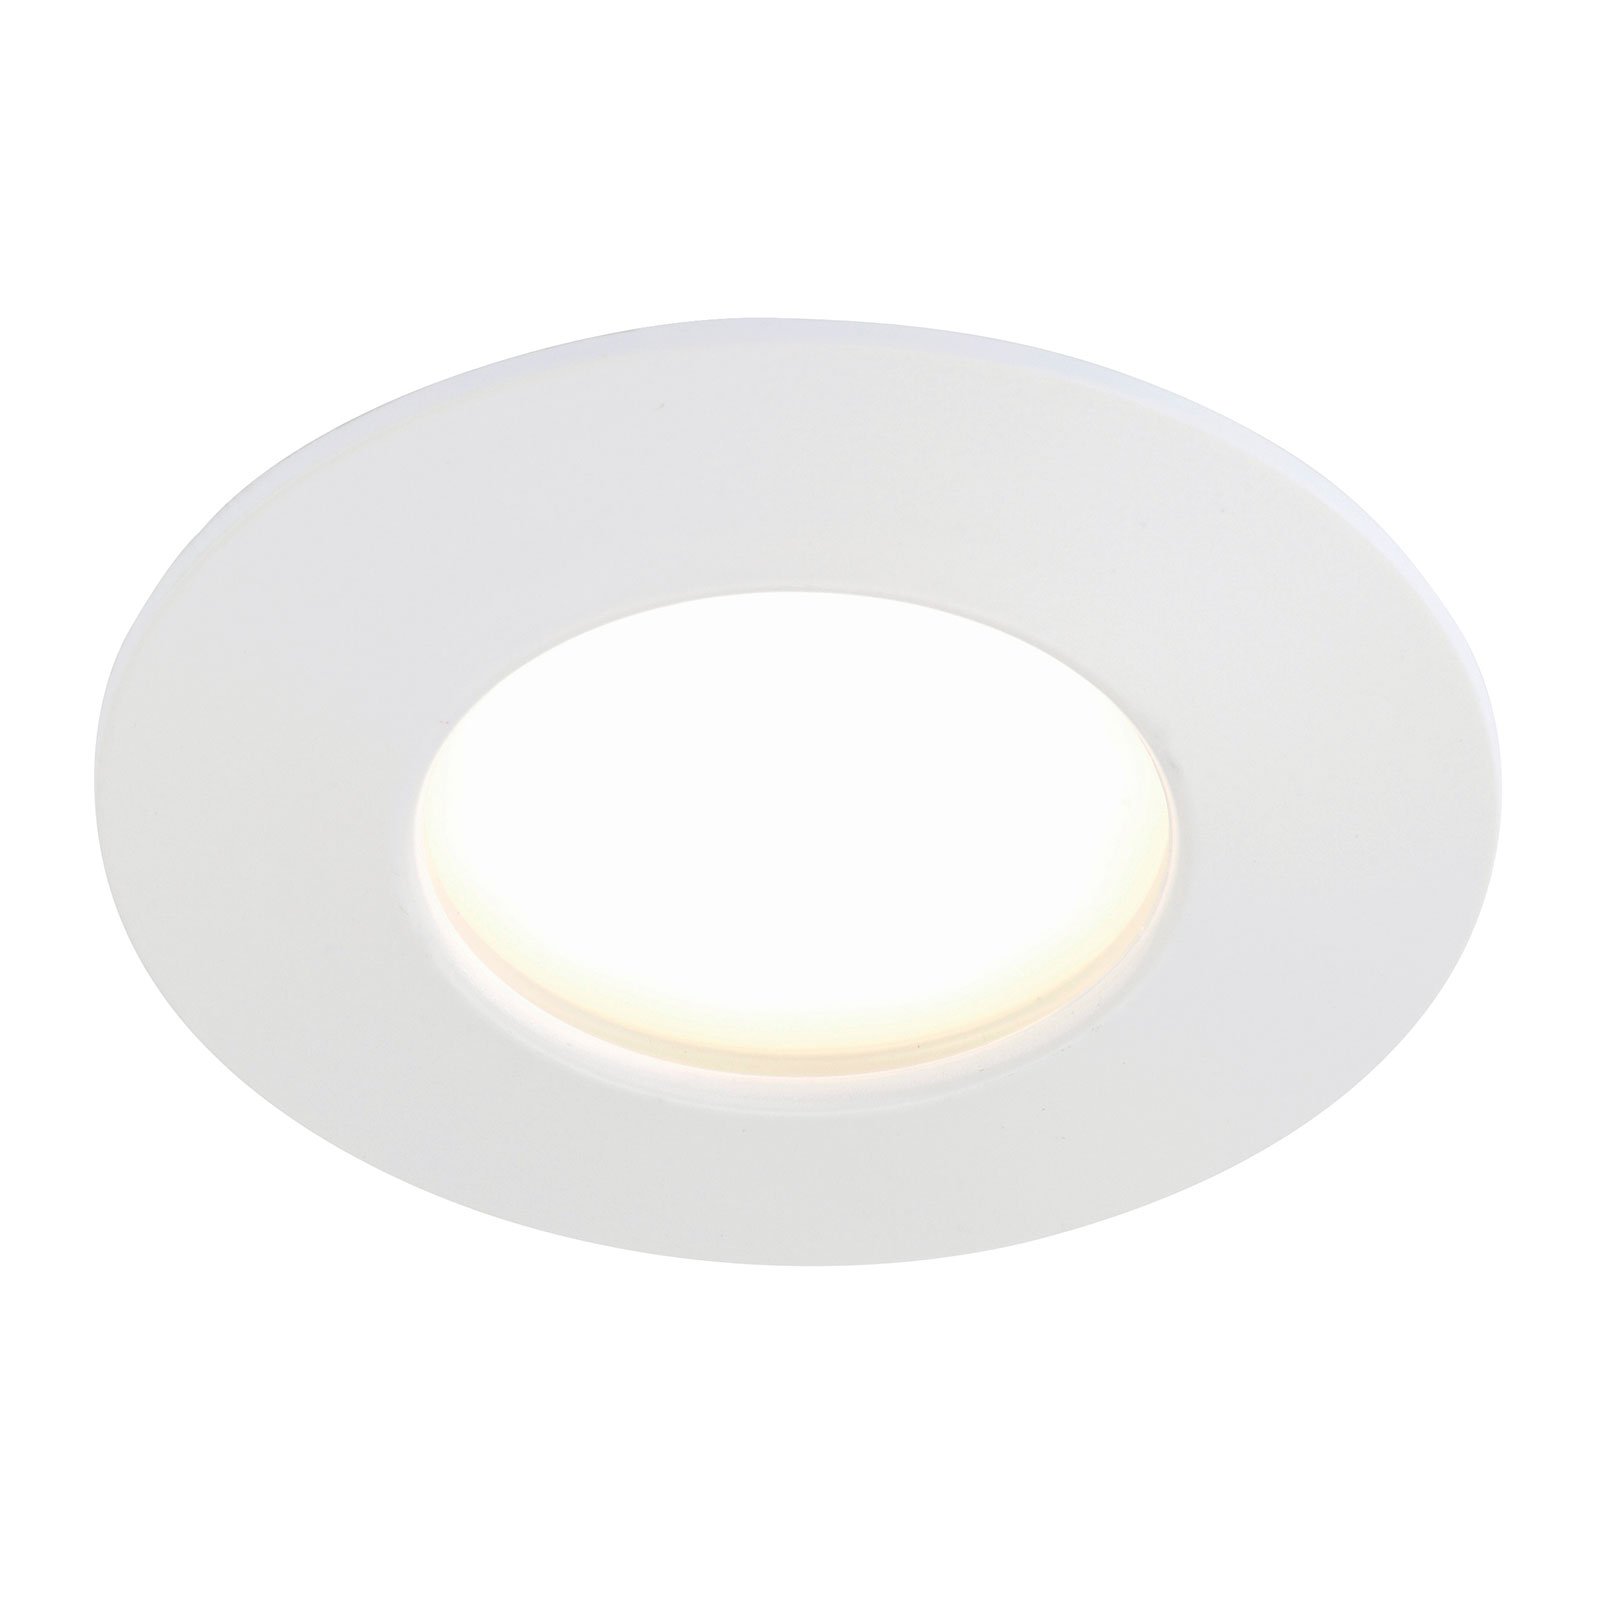 Luminaire encastrable LED Attach Dim, blanc, IP44